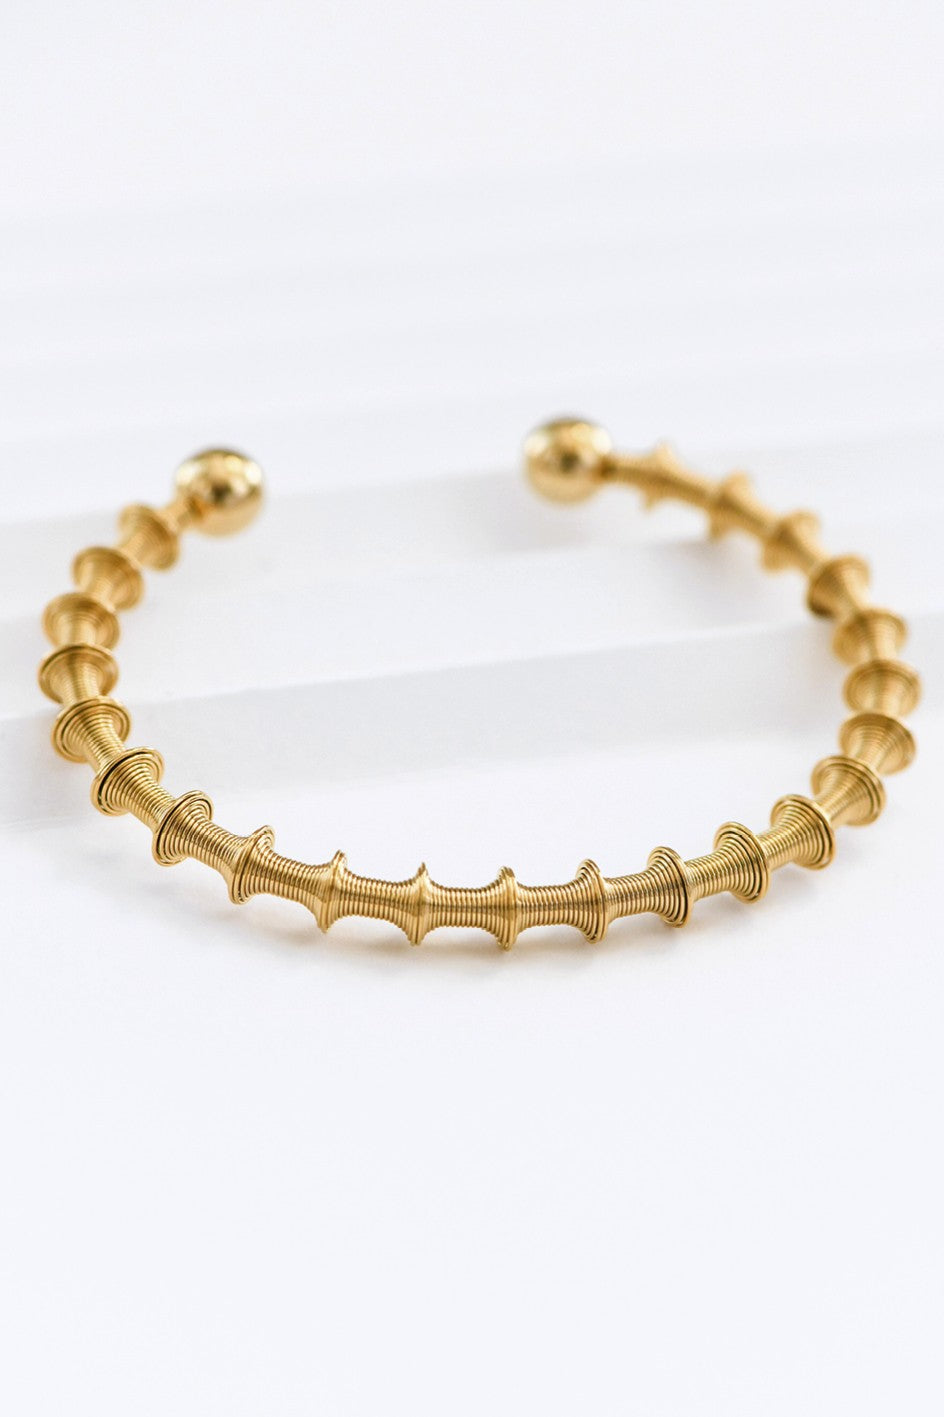 18K Gold Plate Cable Cuff Bangle Bracelet